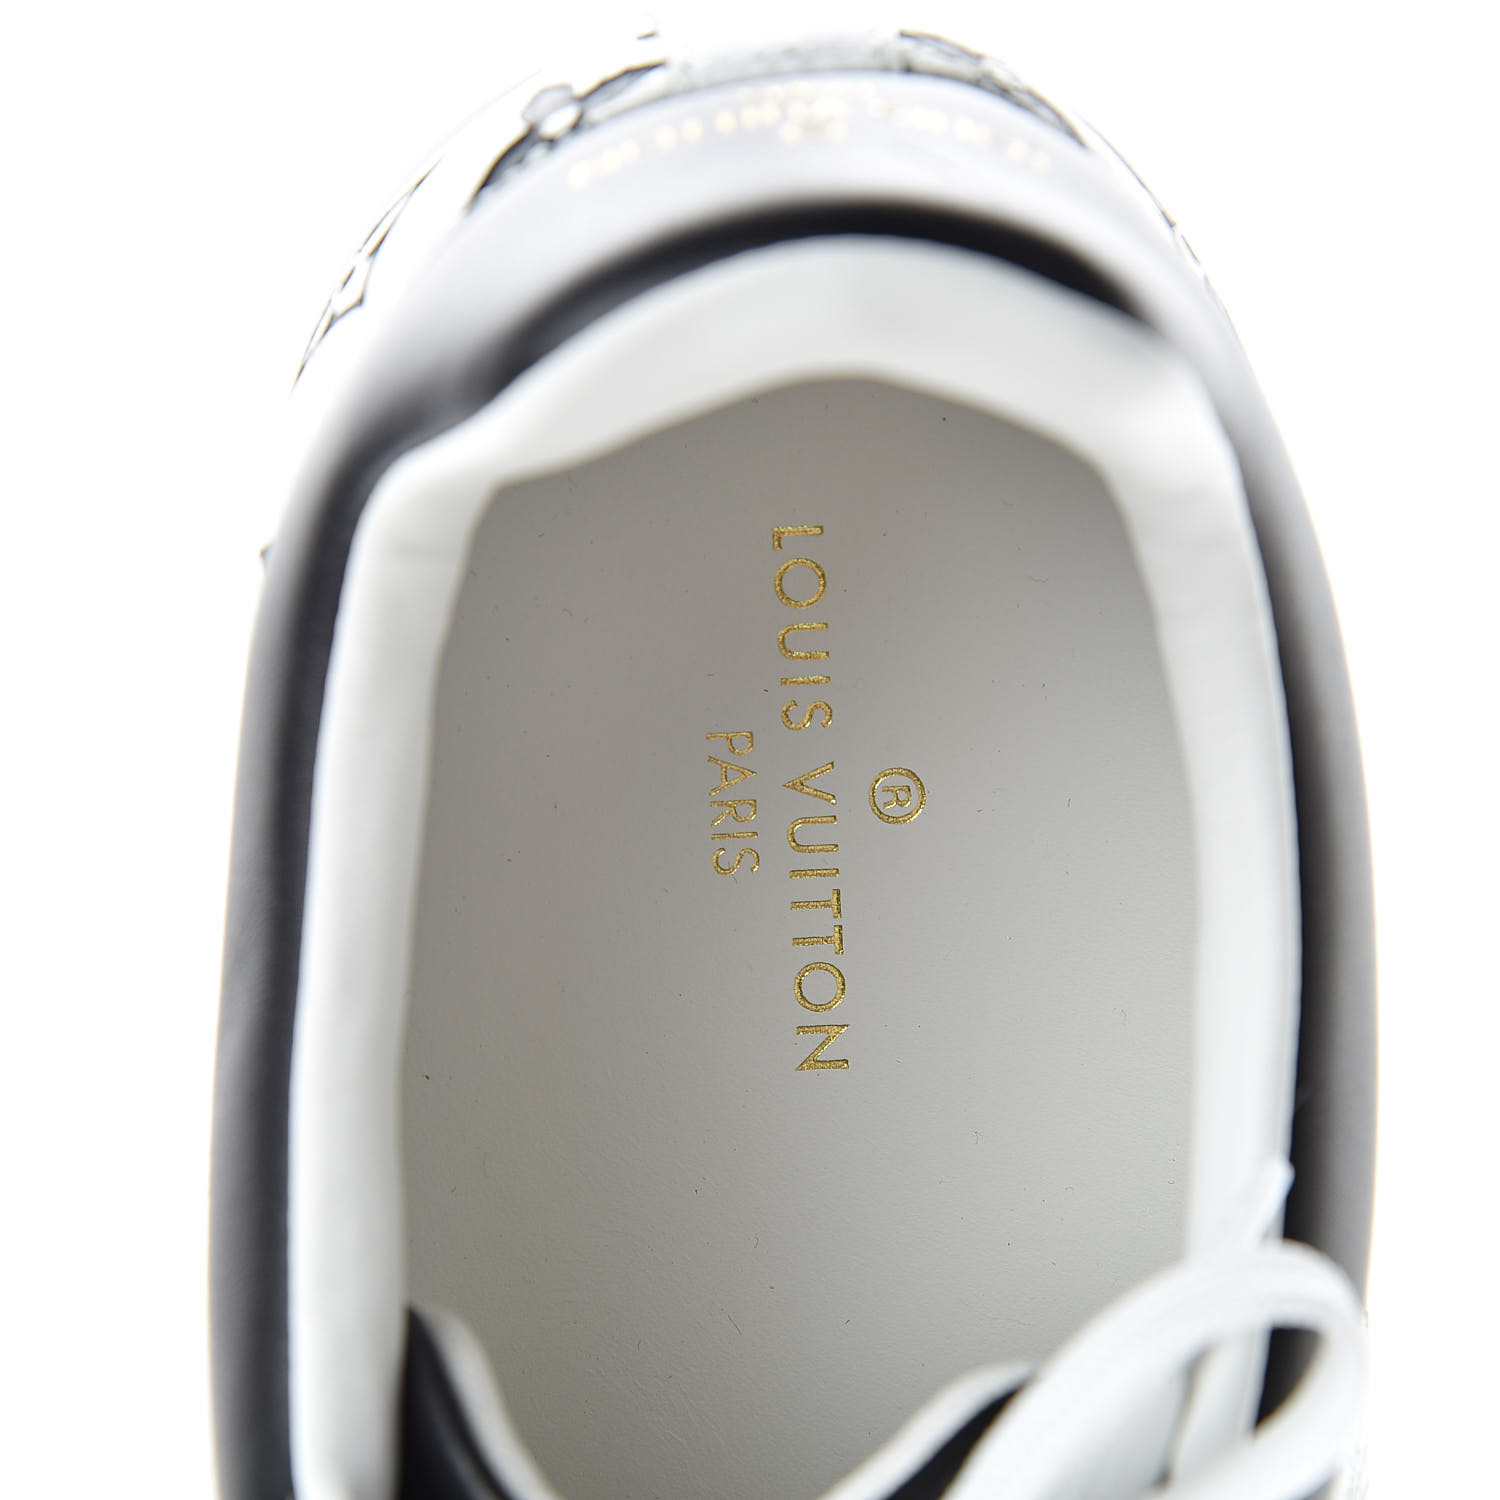 LOUIS VUITTON Calfskin Monogram Mens Luxembourg Sneakers 8.5 White 498224